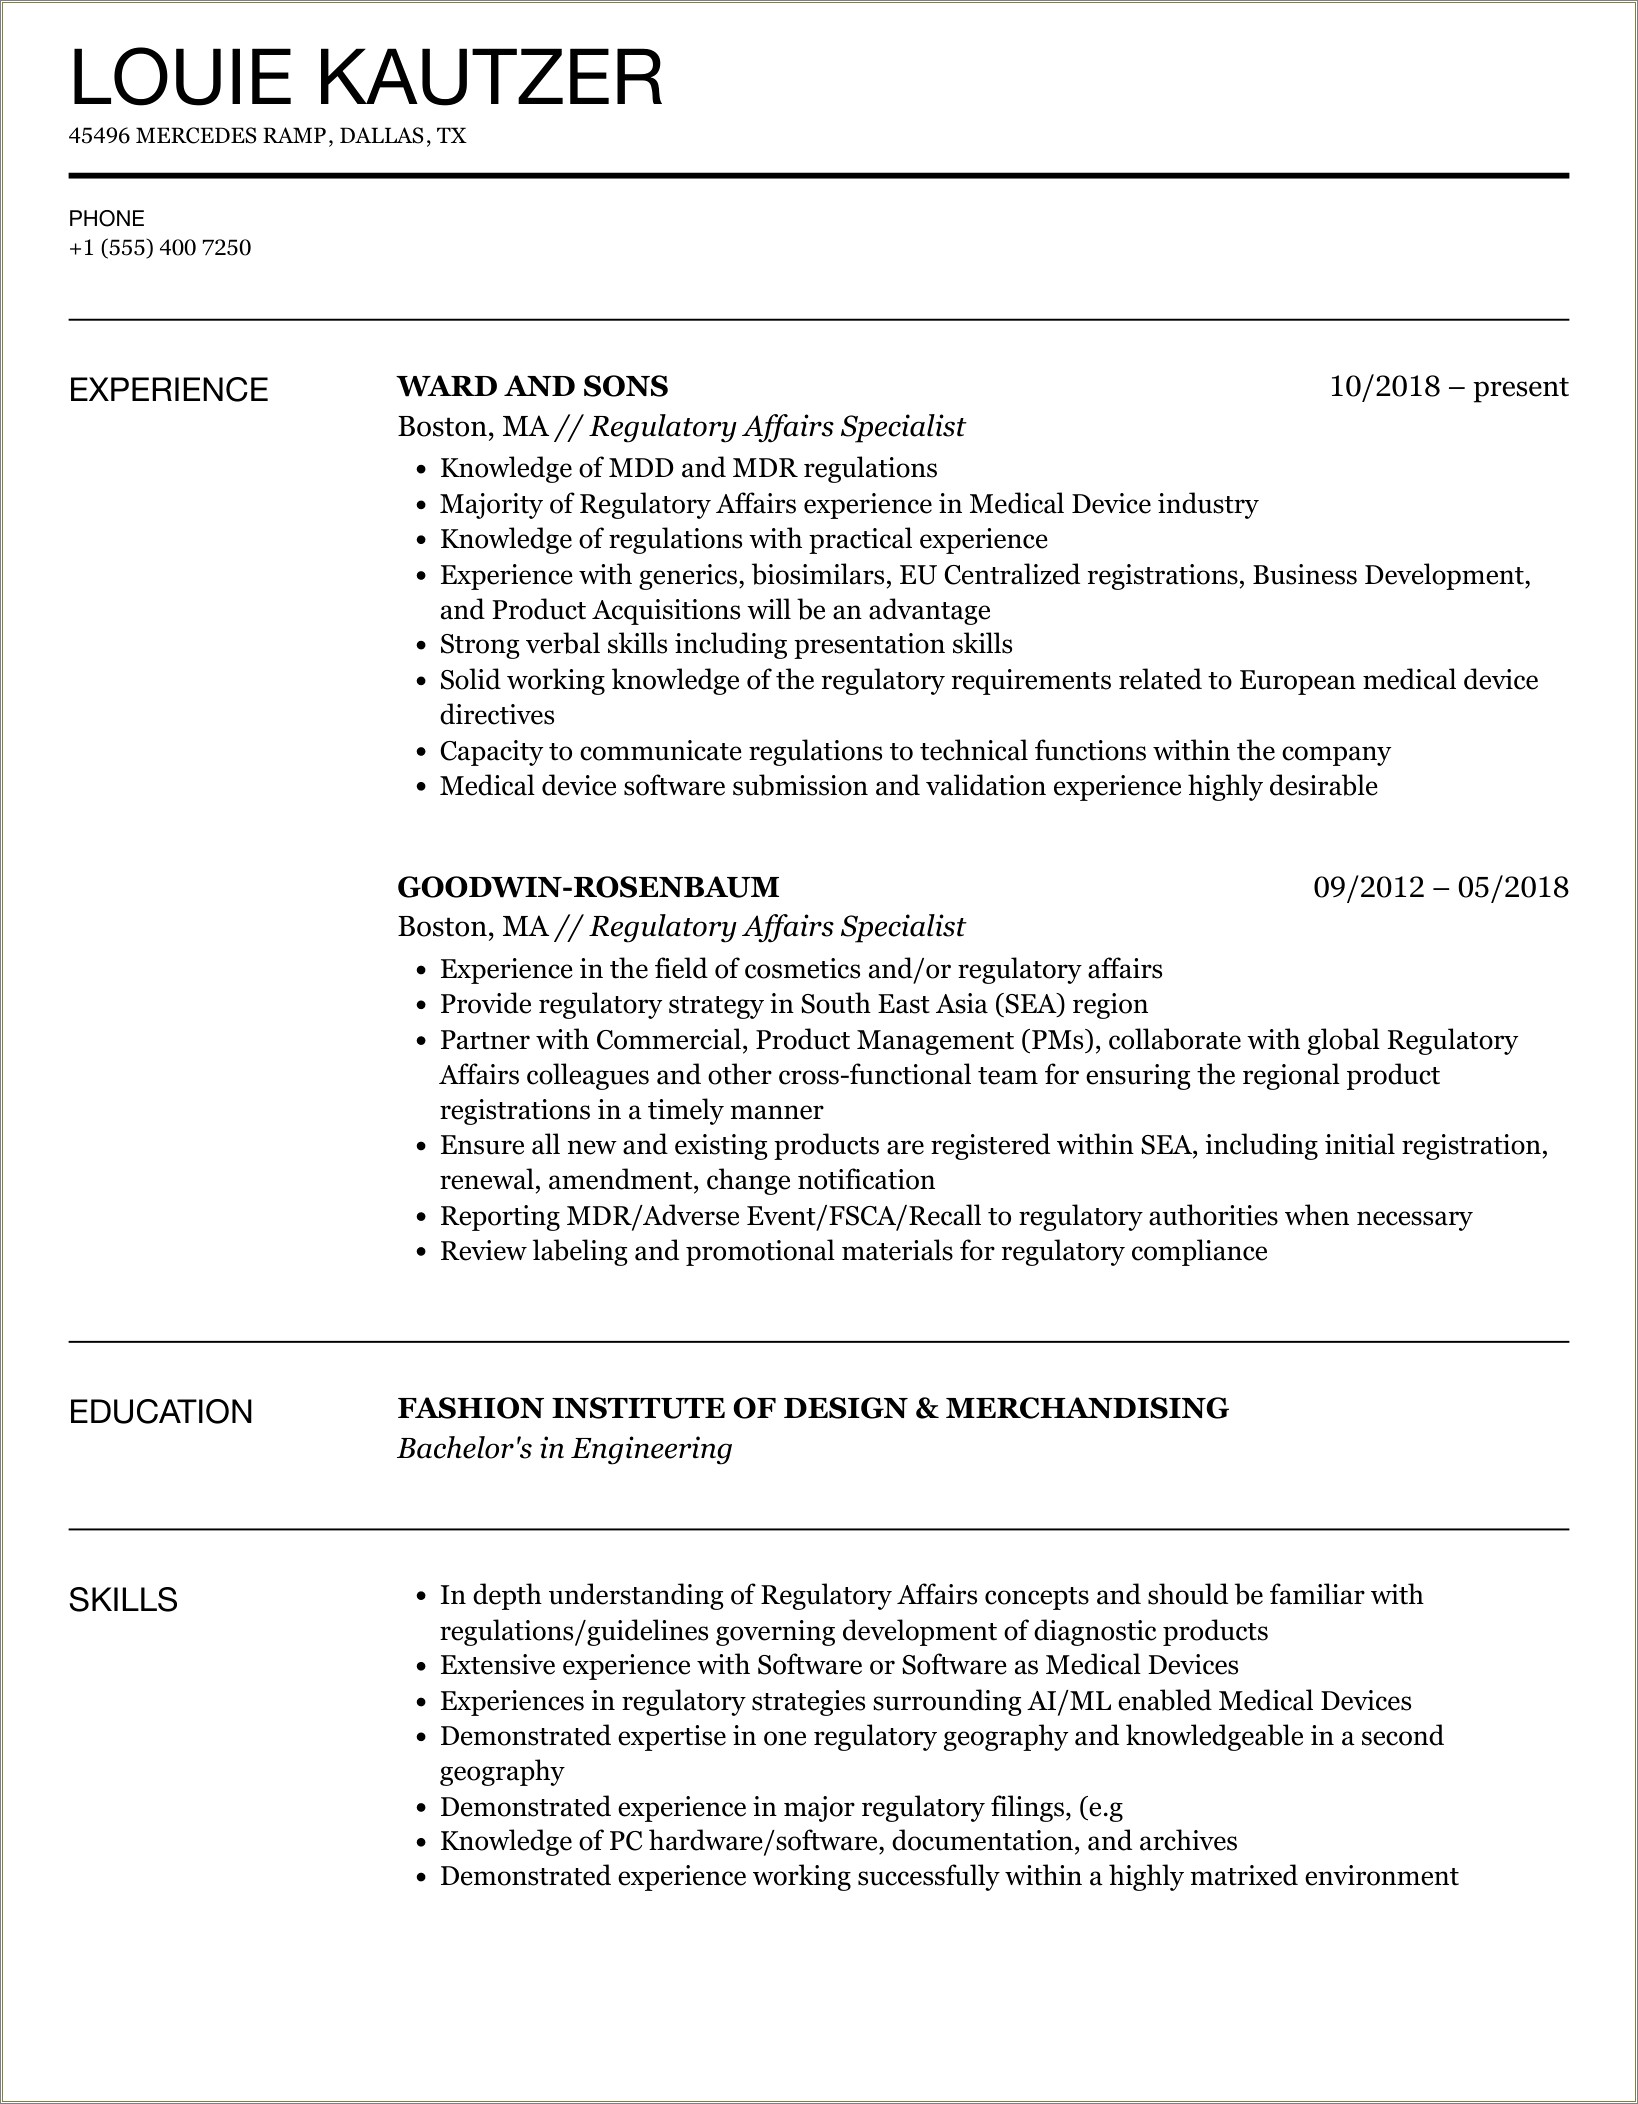 Sample Resume For International Regulatory Affairs Associate